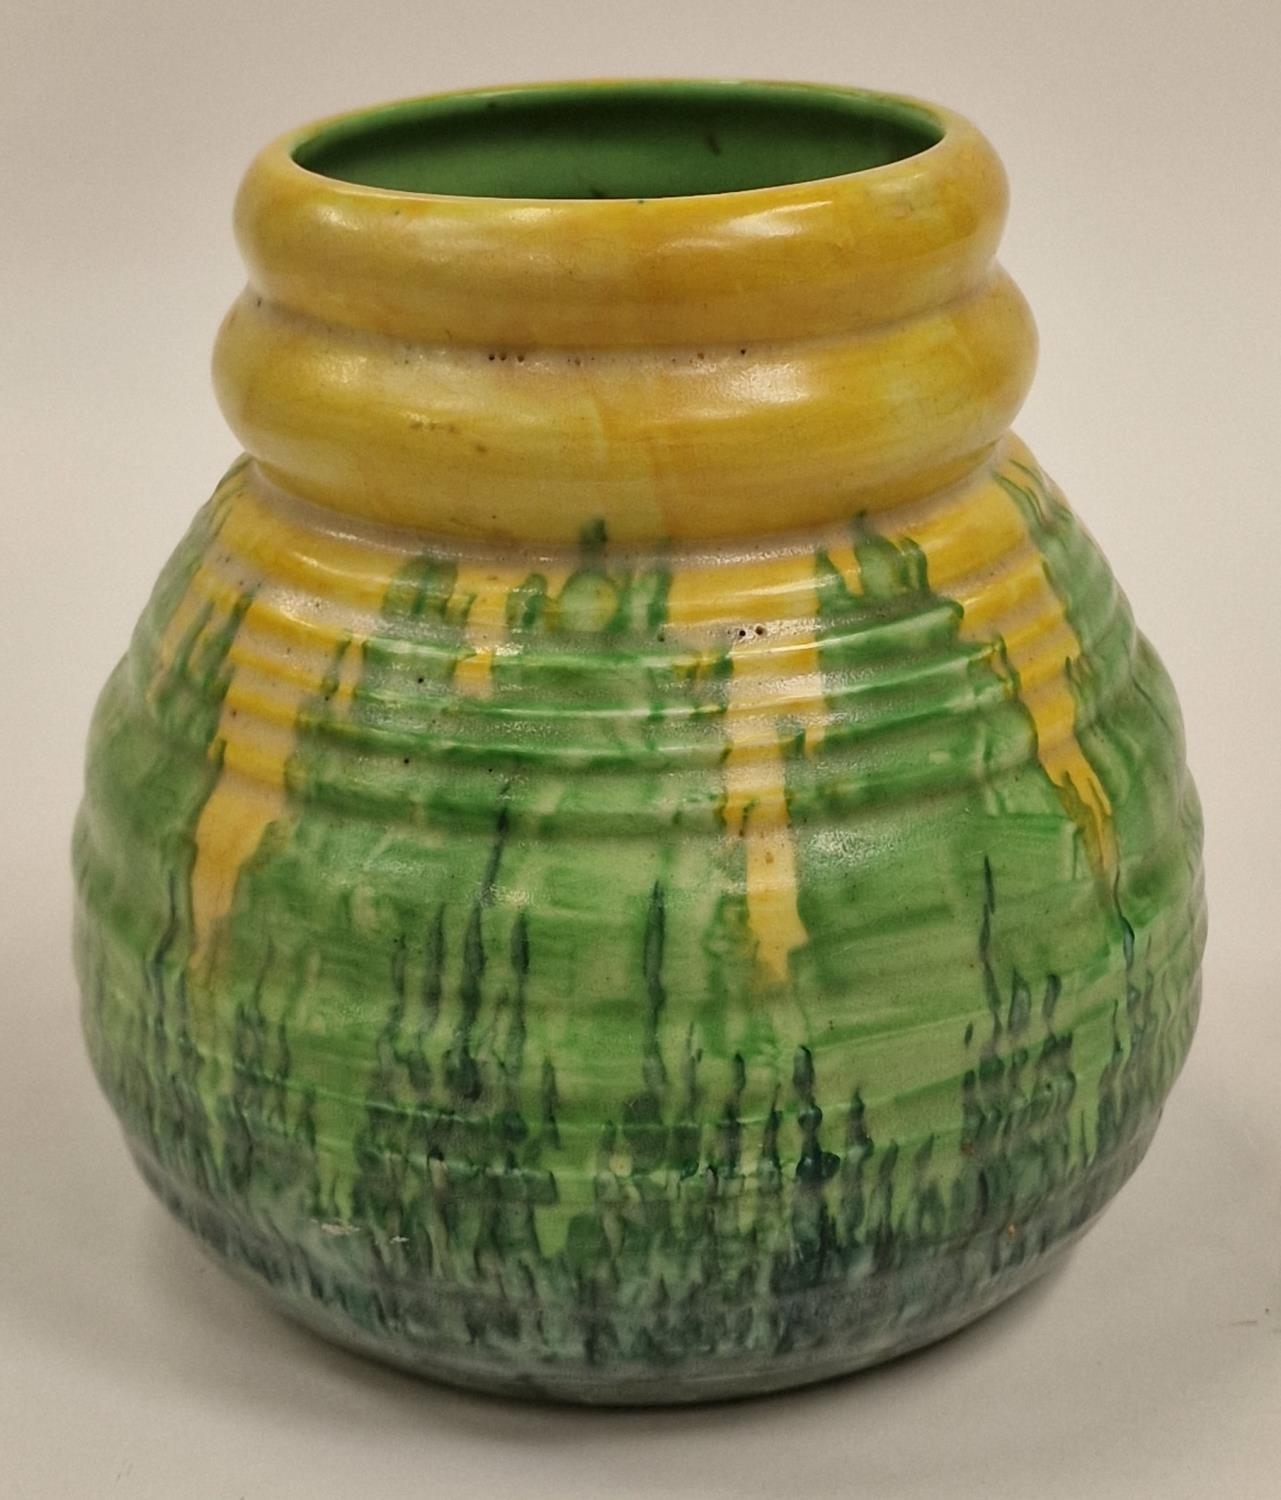 Carlton Ware "Running Drip" Art Deco green and yellow 1930's vase 15cm tall.